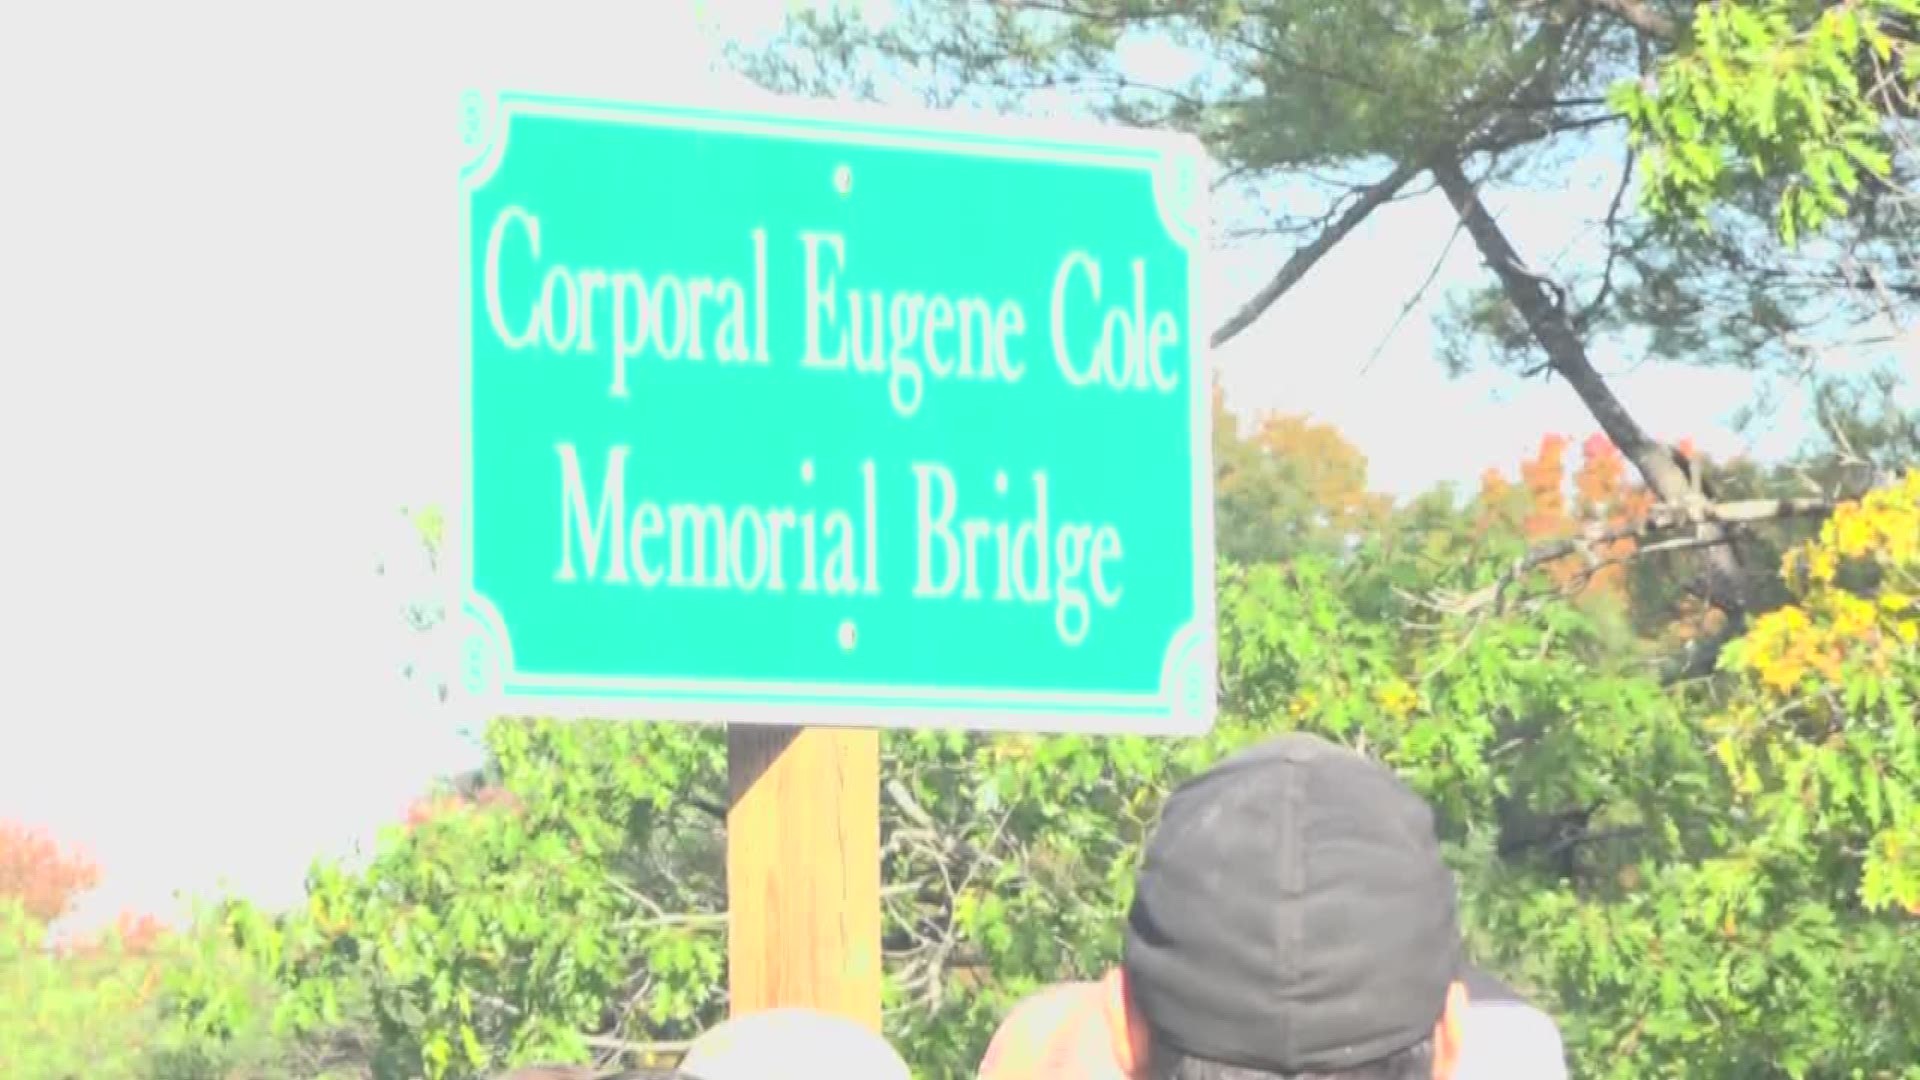 Sen. Collins returns to Maine for Corporal Eugene Cole Memorial Bridge dedication 